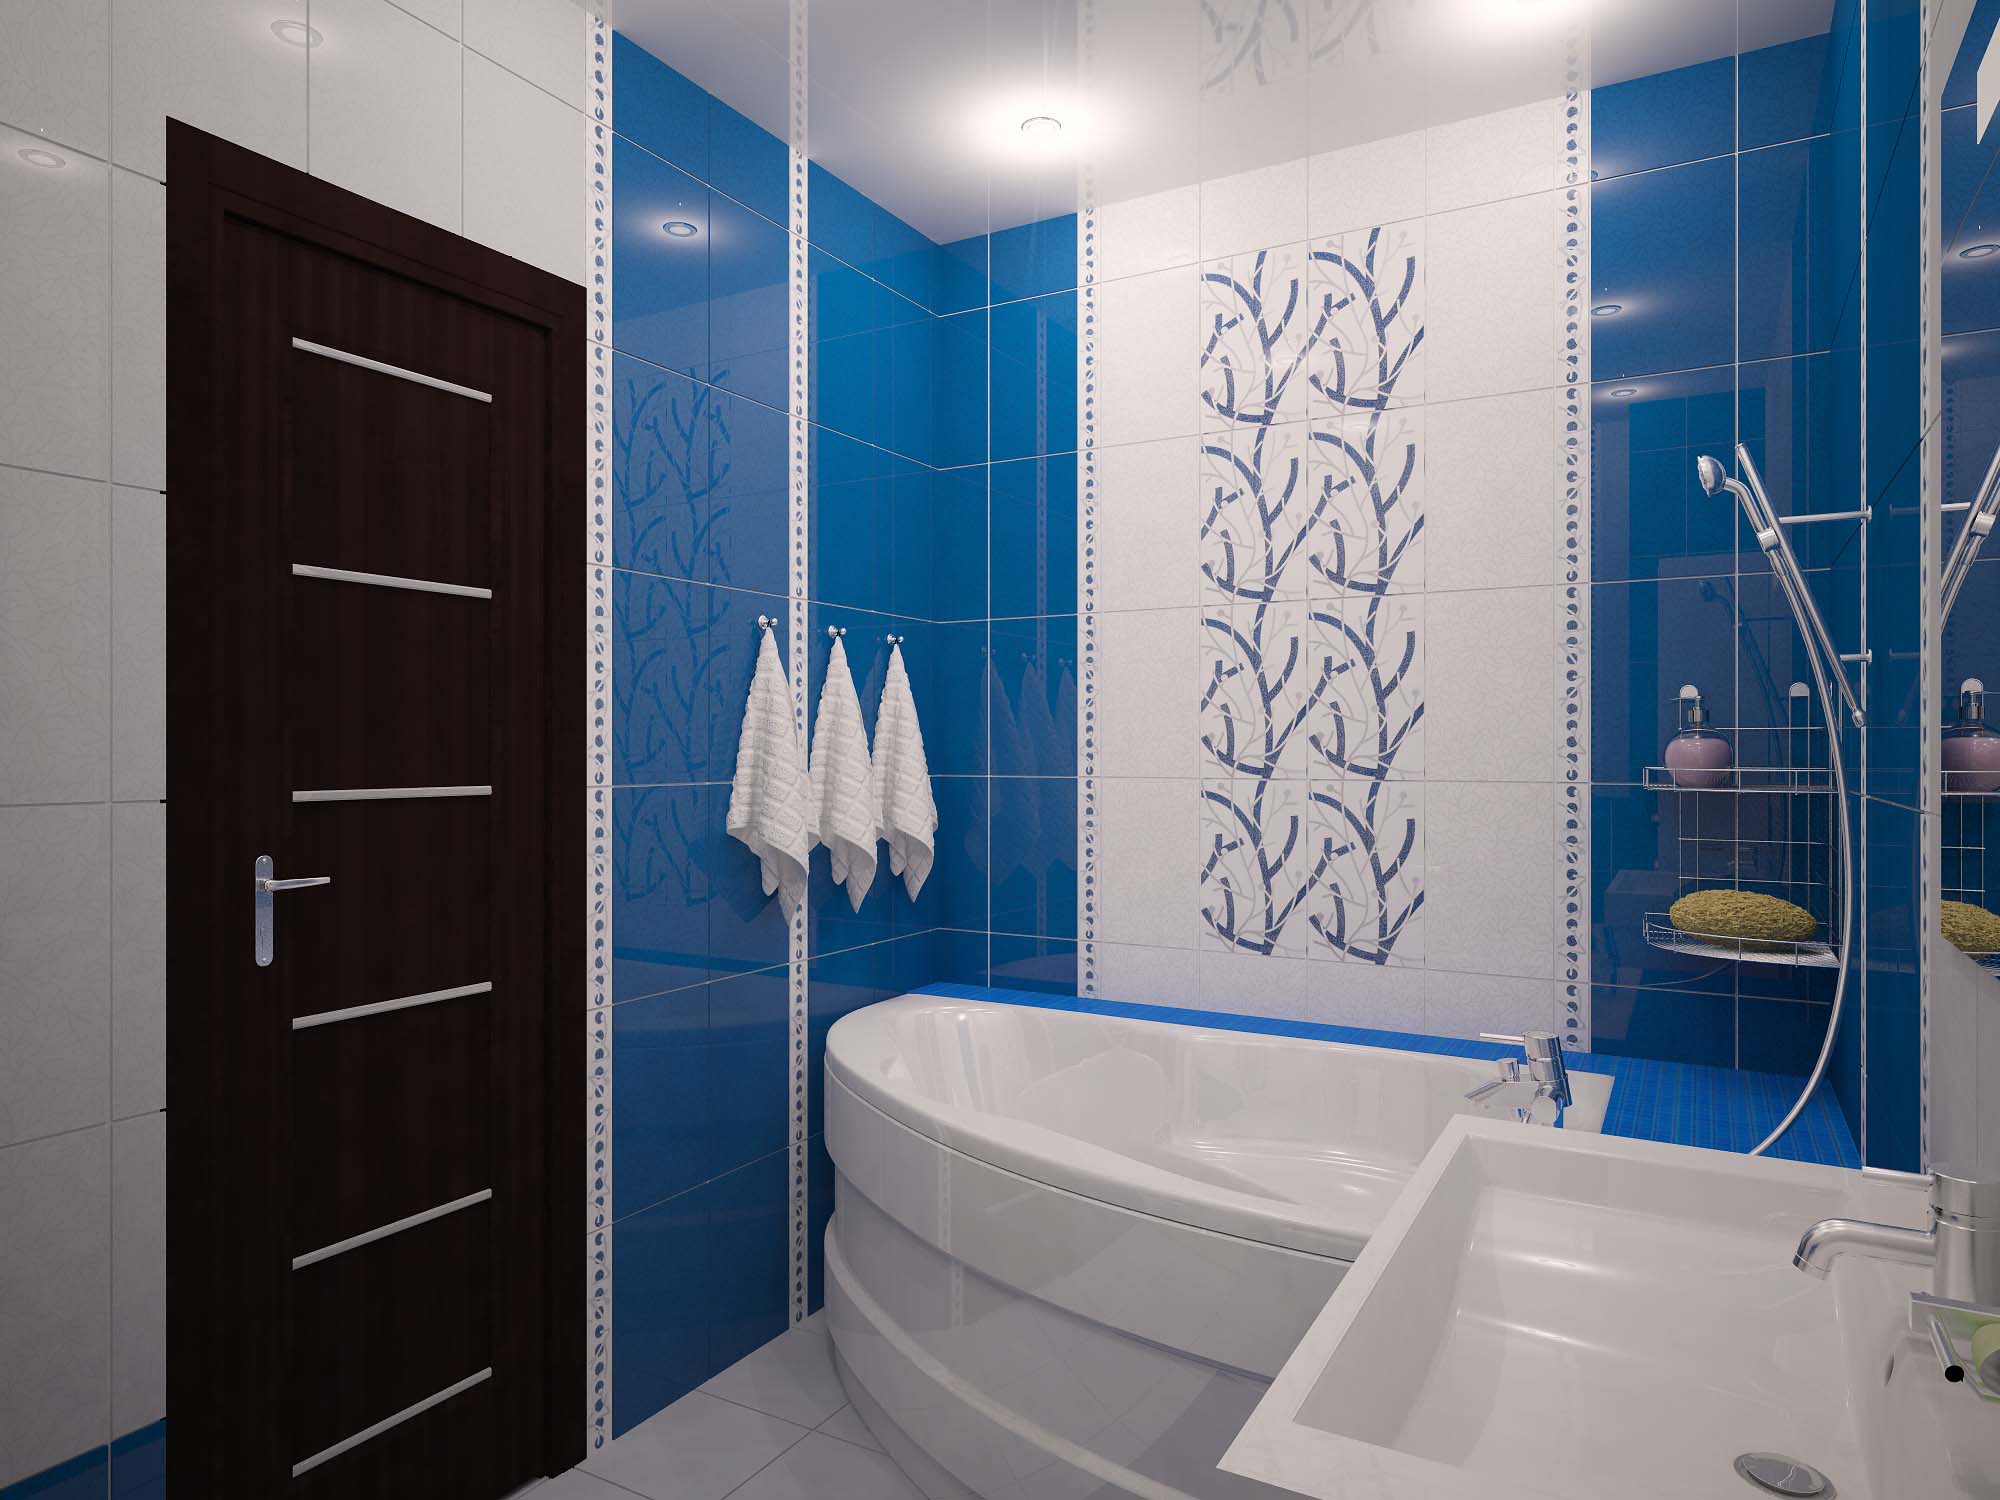 Интерьер ванной комнаты 2 кв м » Картинки и фотографии дизайна квартир .